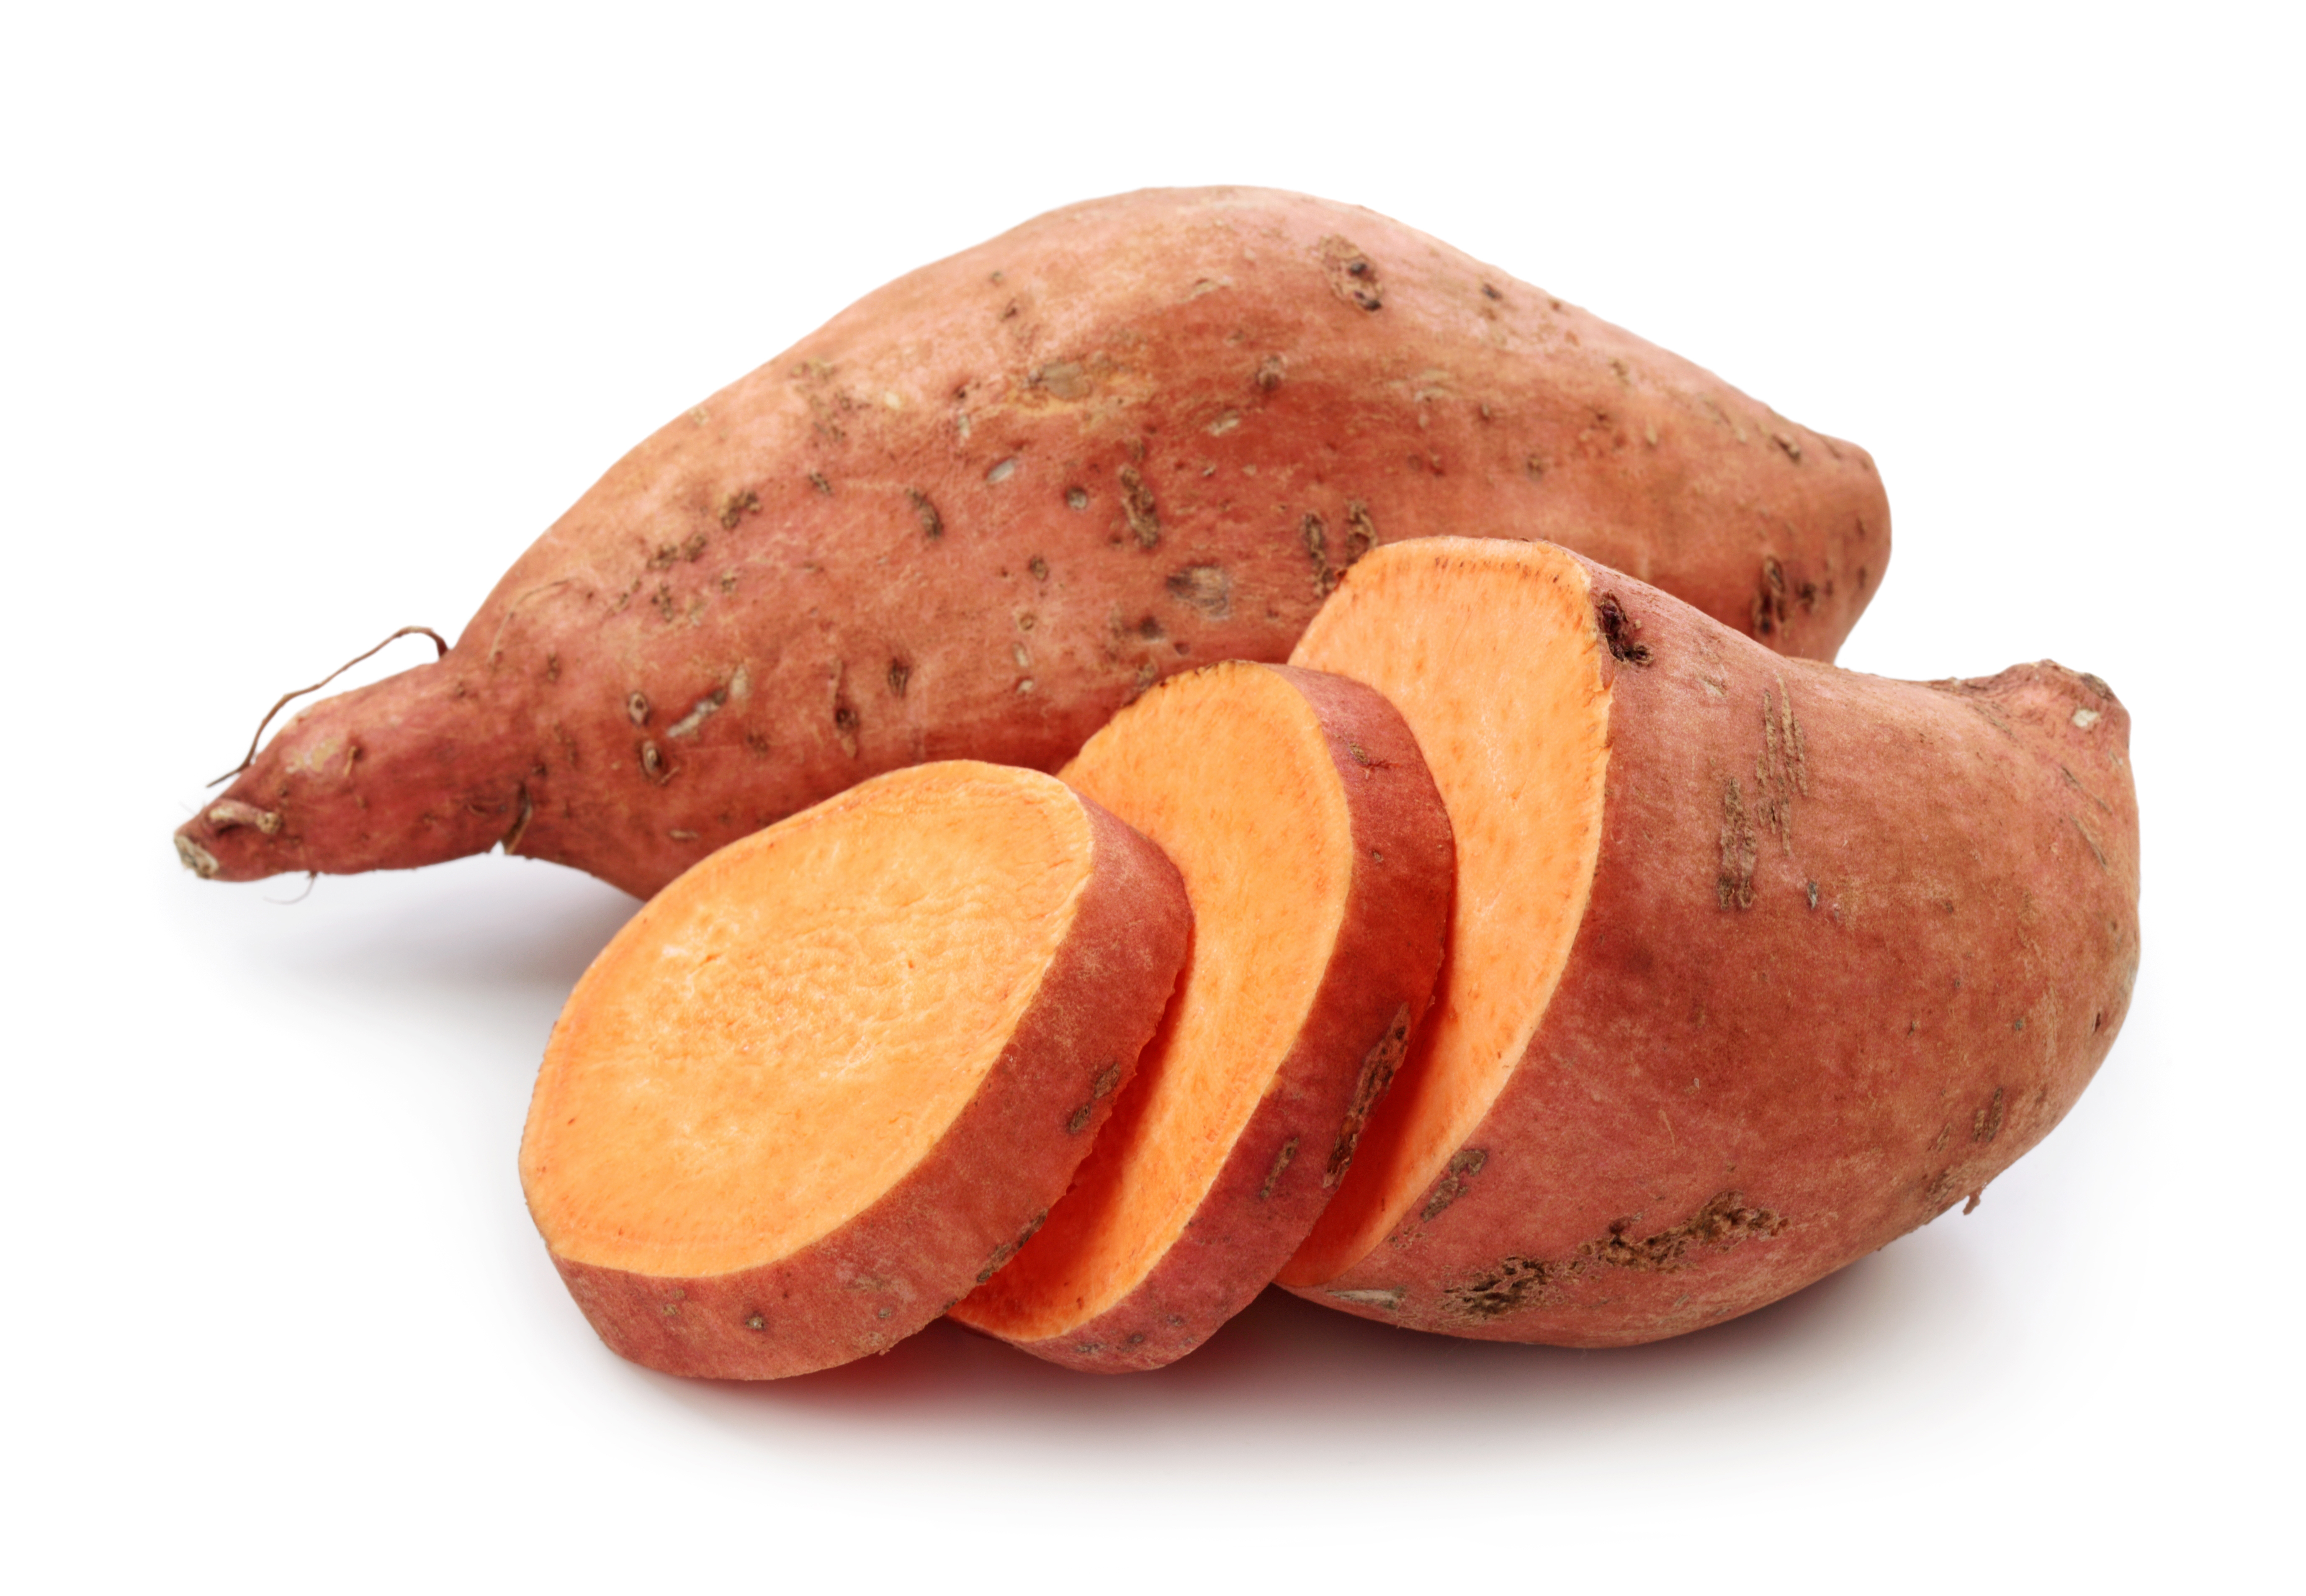 5 health benefits of sweet potatoes and yams